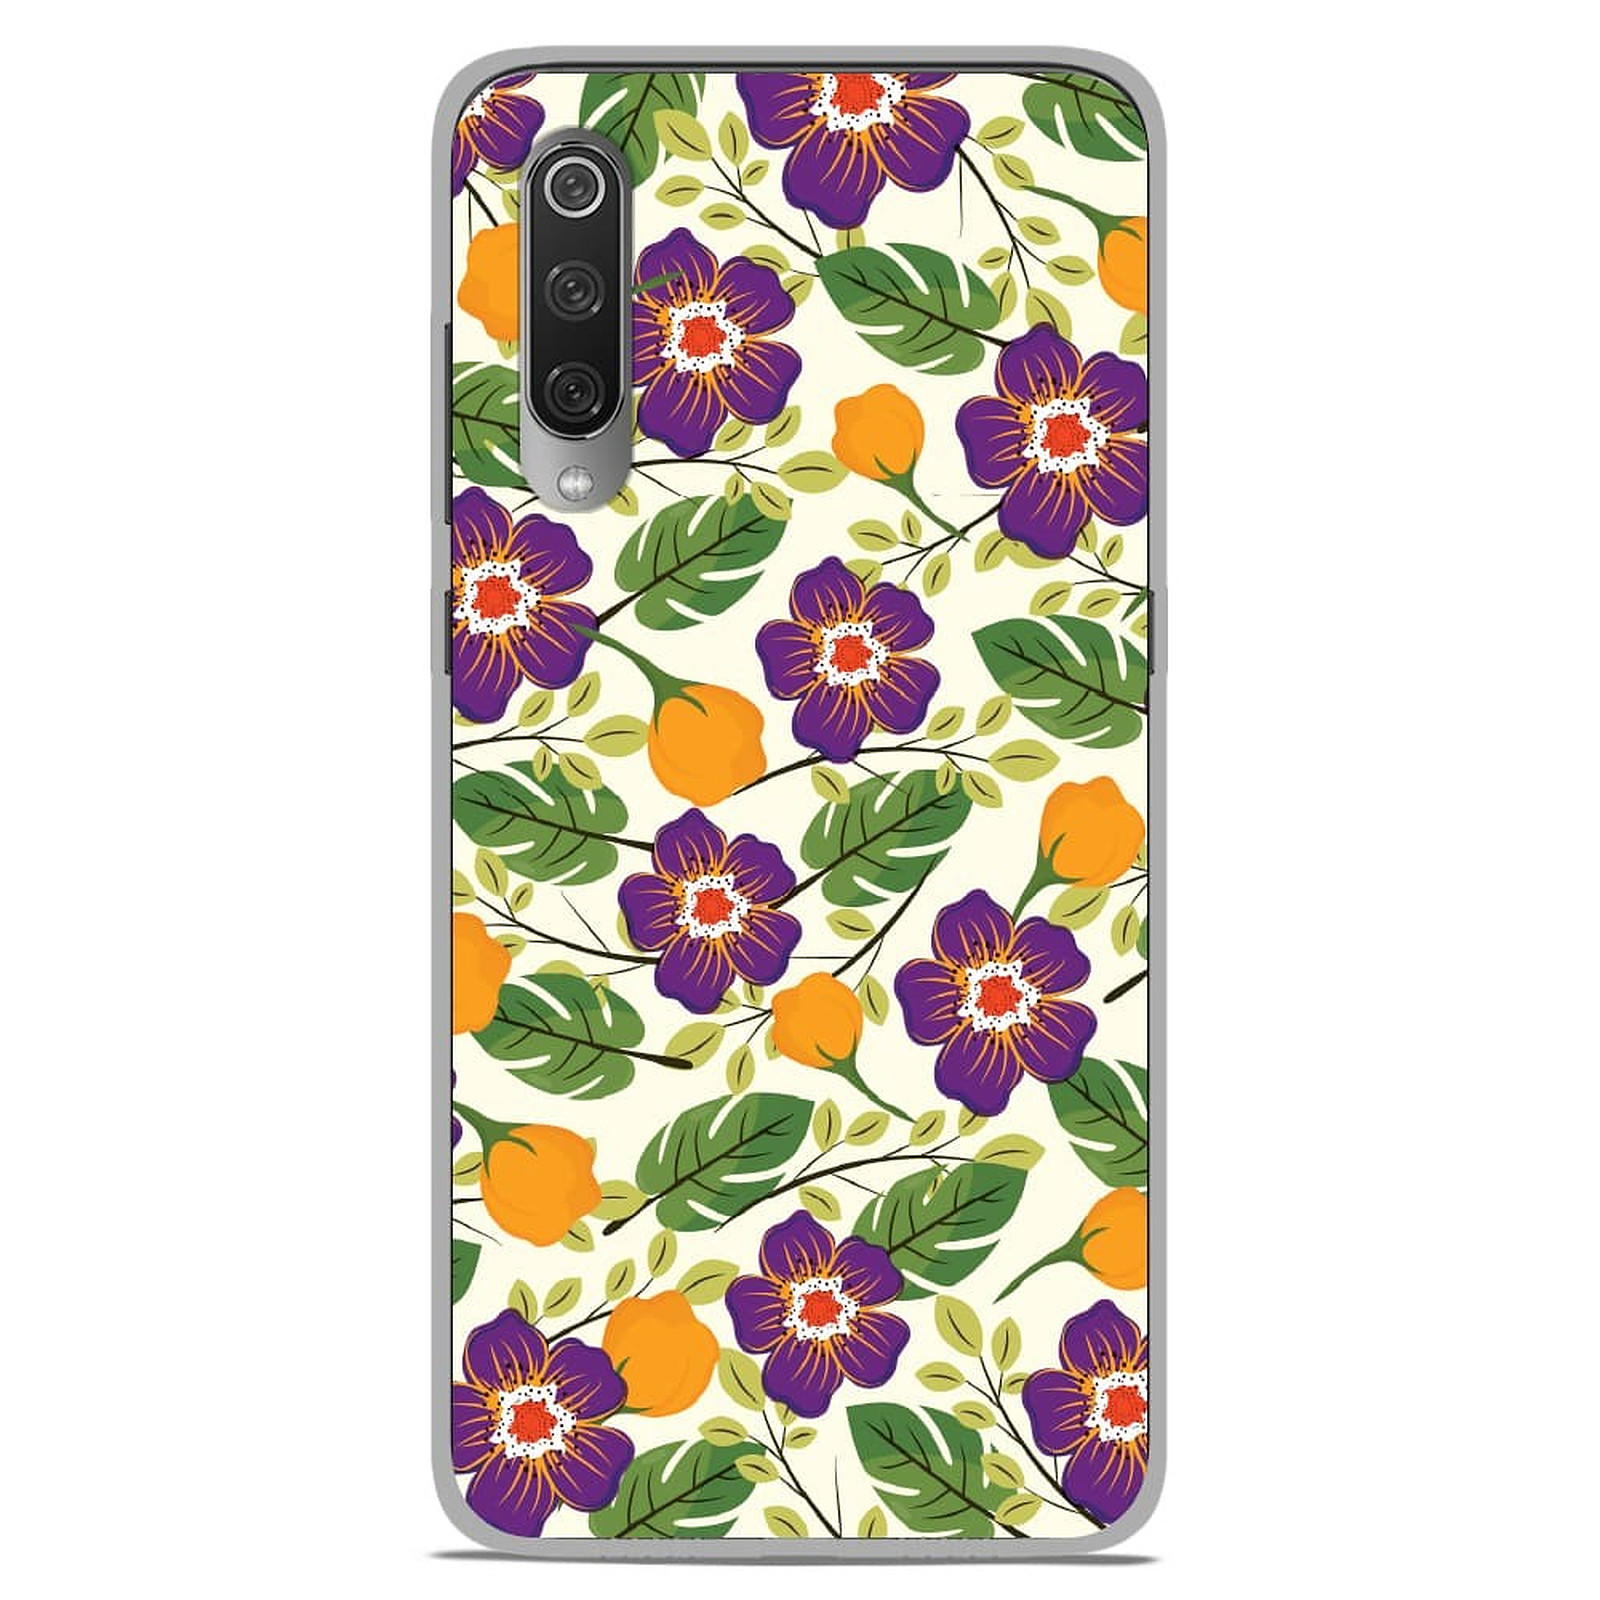 1001 Coques Coque silicone gel Xiaomi Mi 9 / Mi 9 Pro motif Fleurs Violettes - Coque telephone 1001Coques